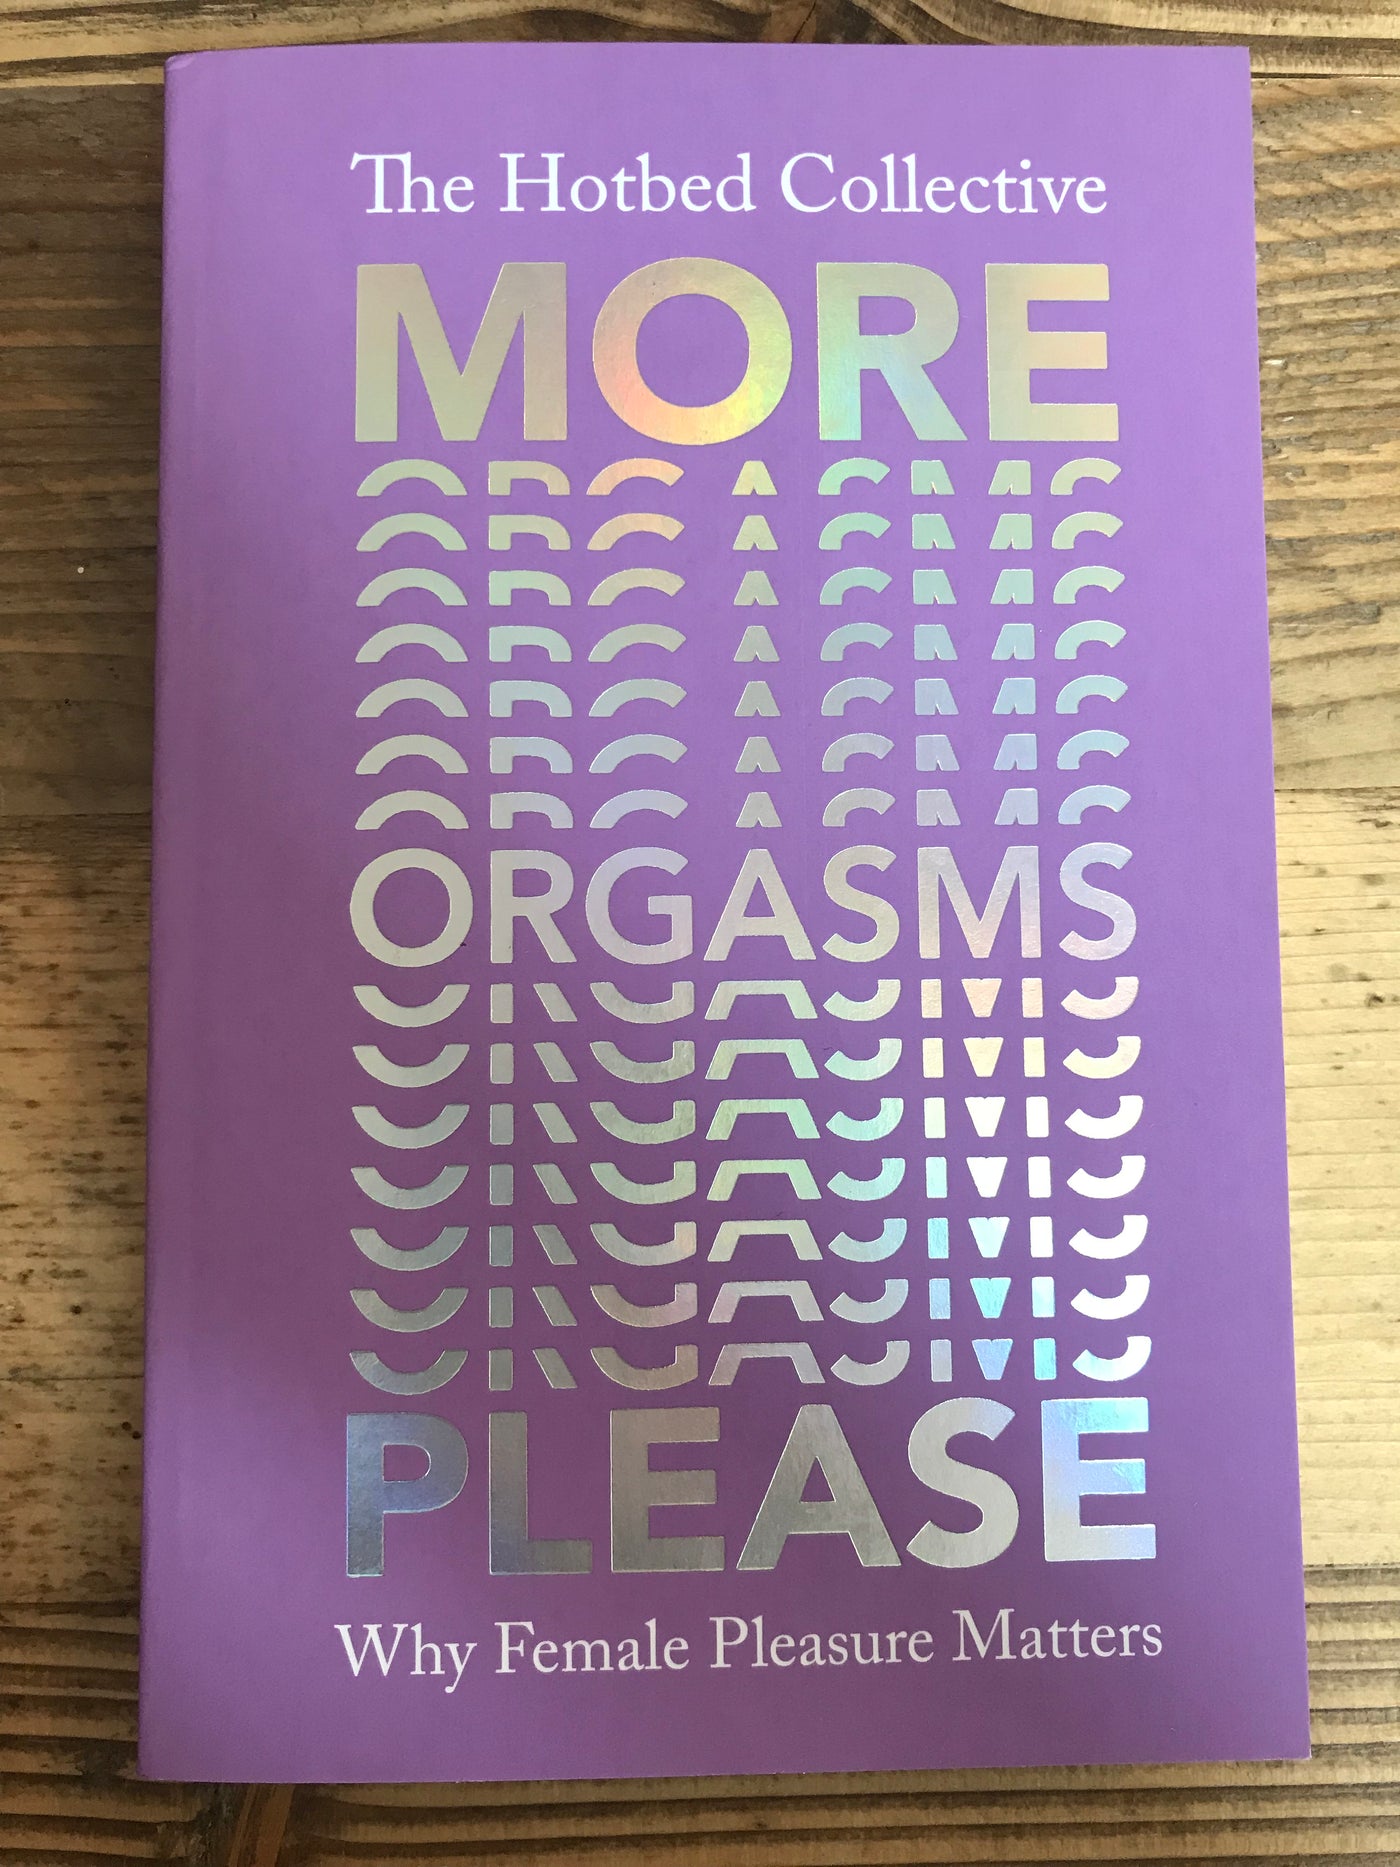 More Orgasms Please